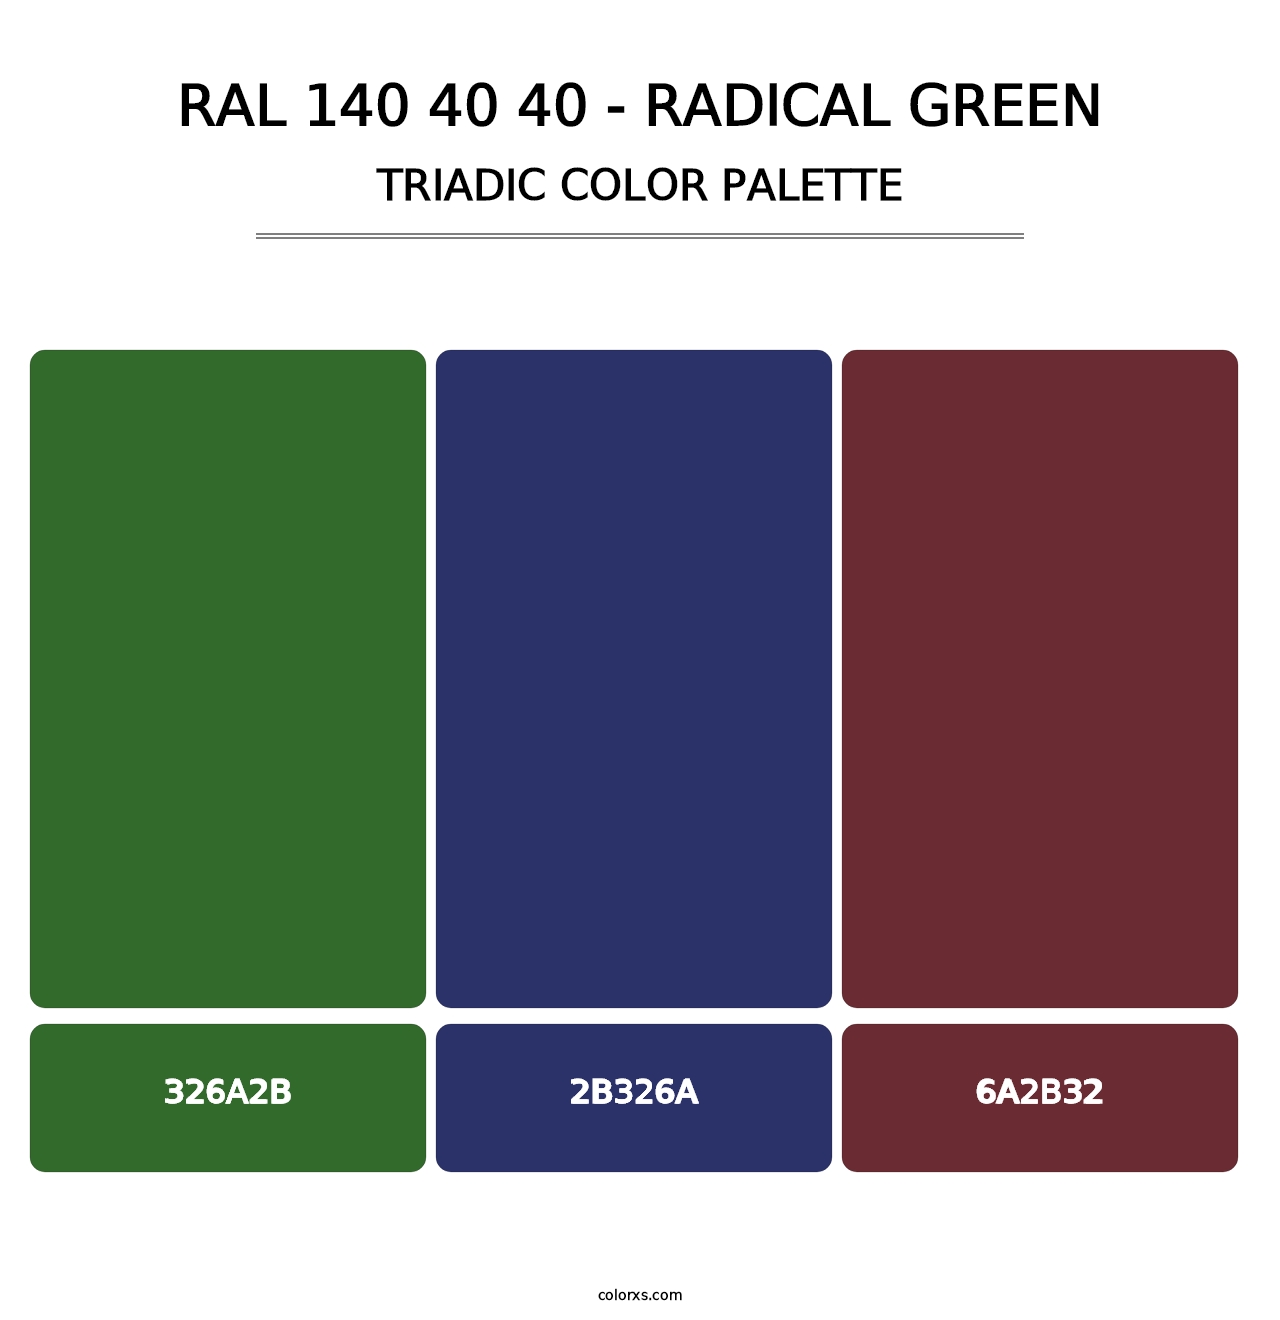 RAL 140 40 40 - Radical Green - Triadic Color Palette